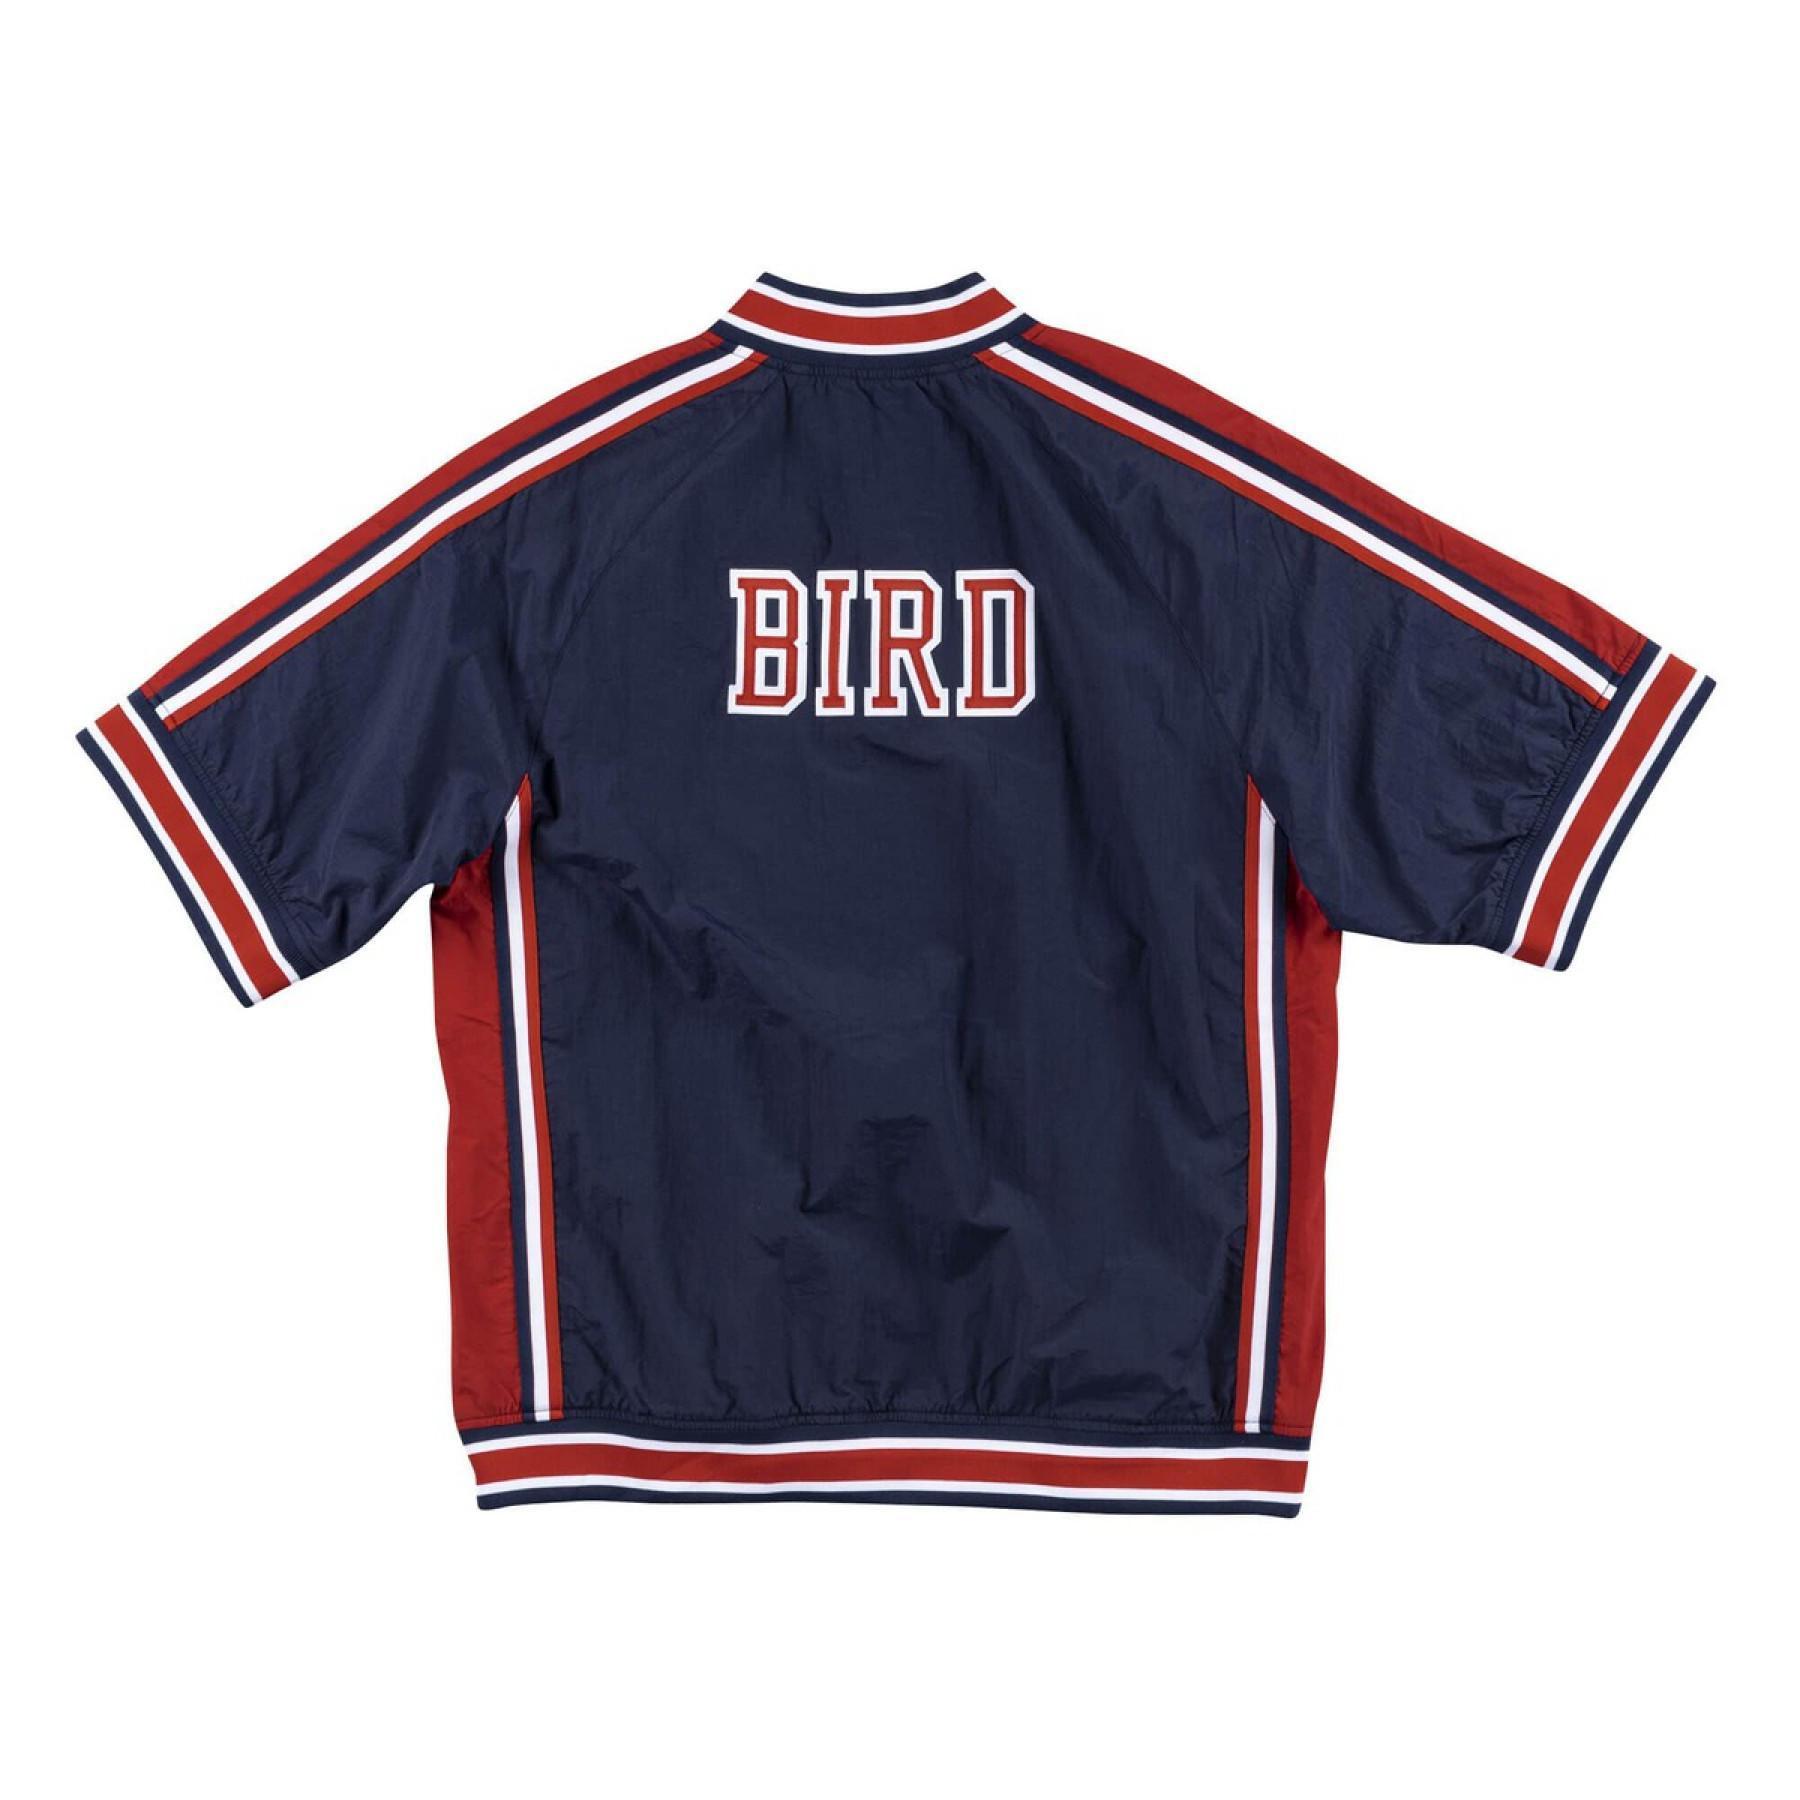 Team jacket USA authentic Larry Bird